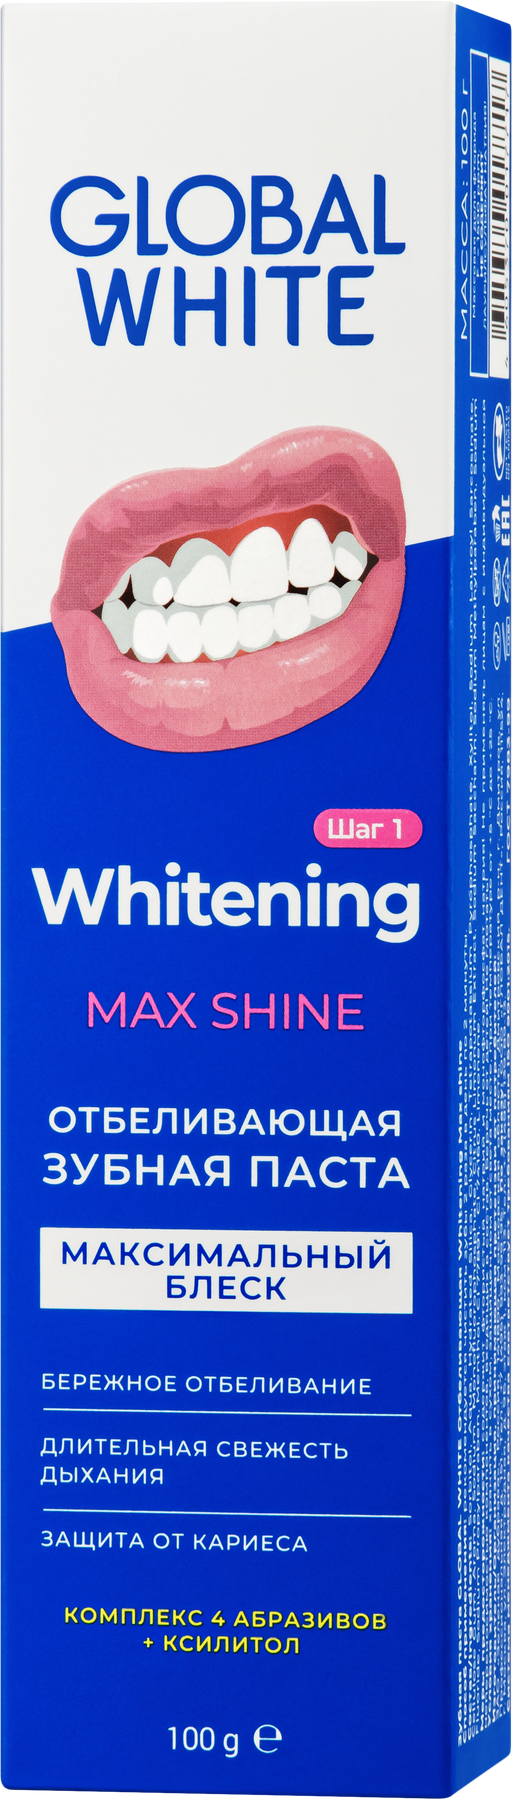 Global White Whitening Max Shine Зубная паста Отбеливающая, паста зубная, 100 мл, 1 шт.